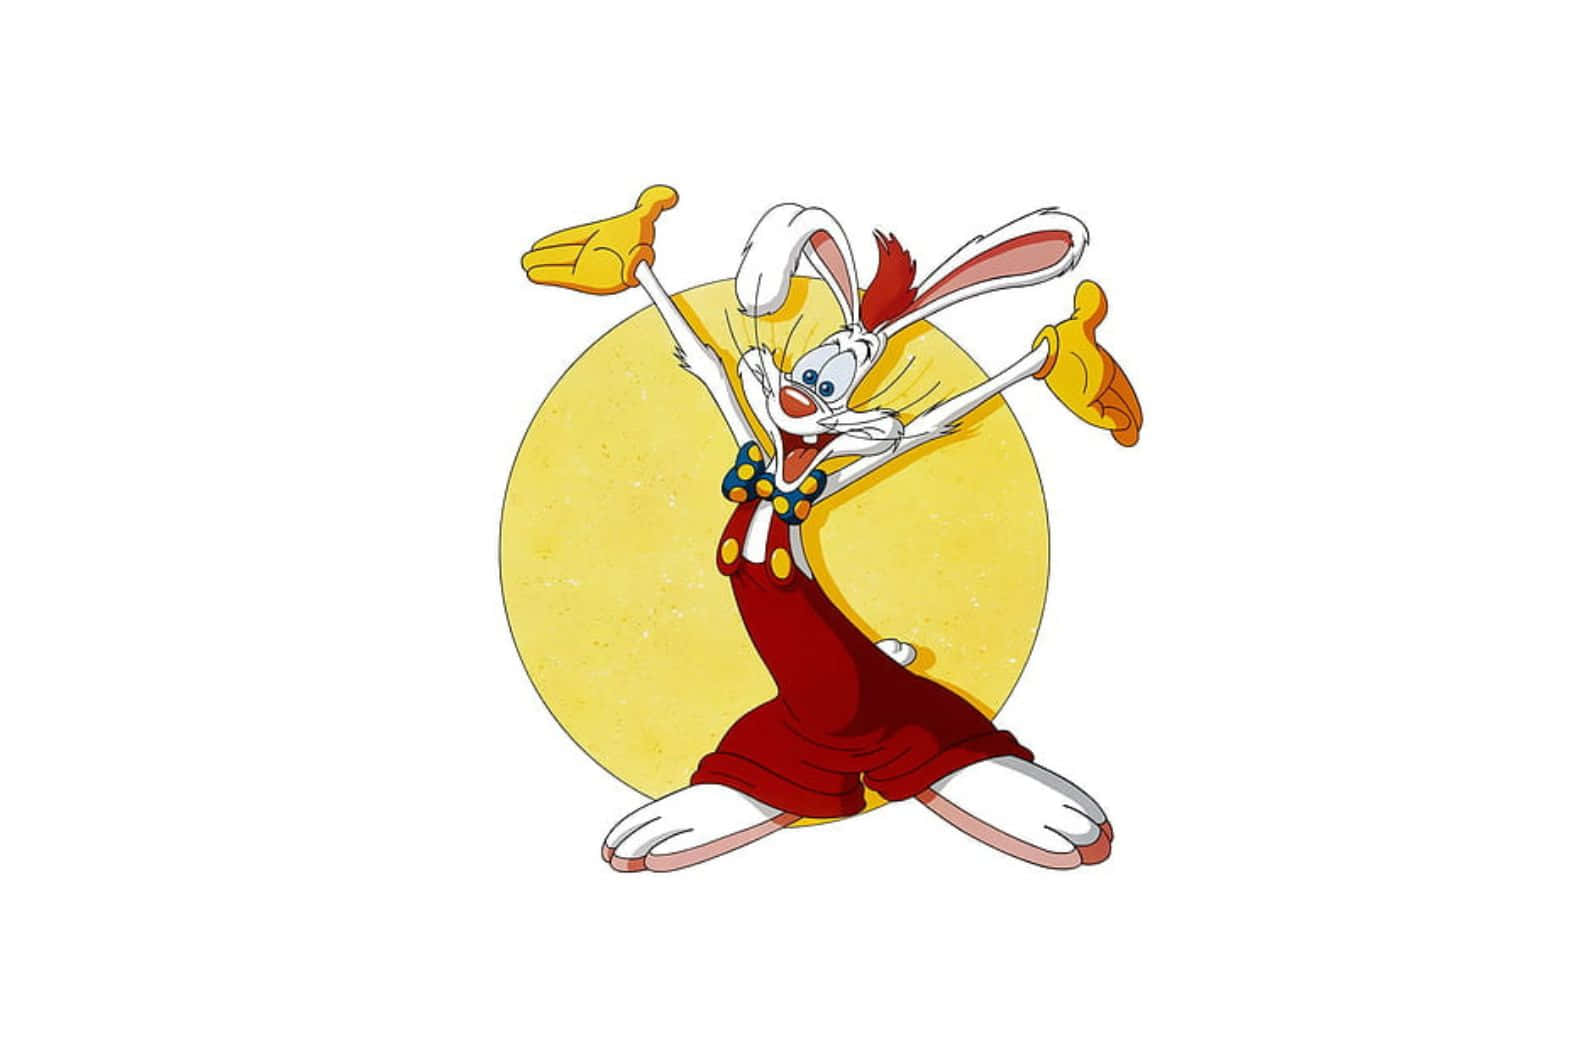 Roger Rabbit Cartoon Character Background